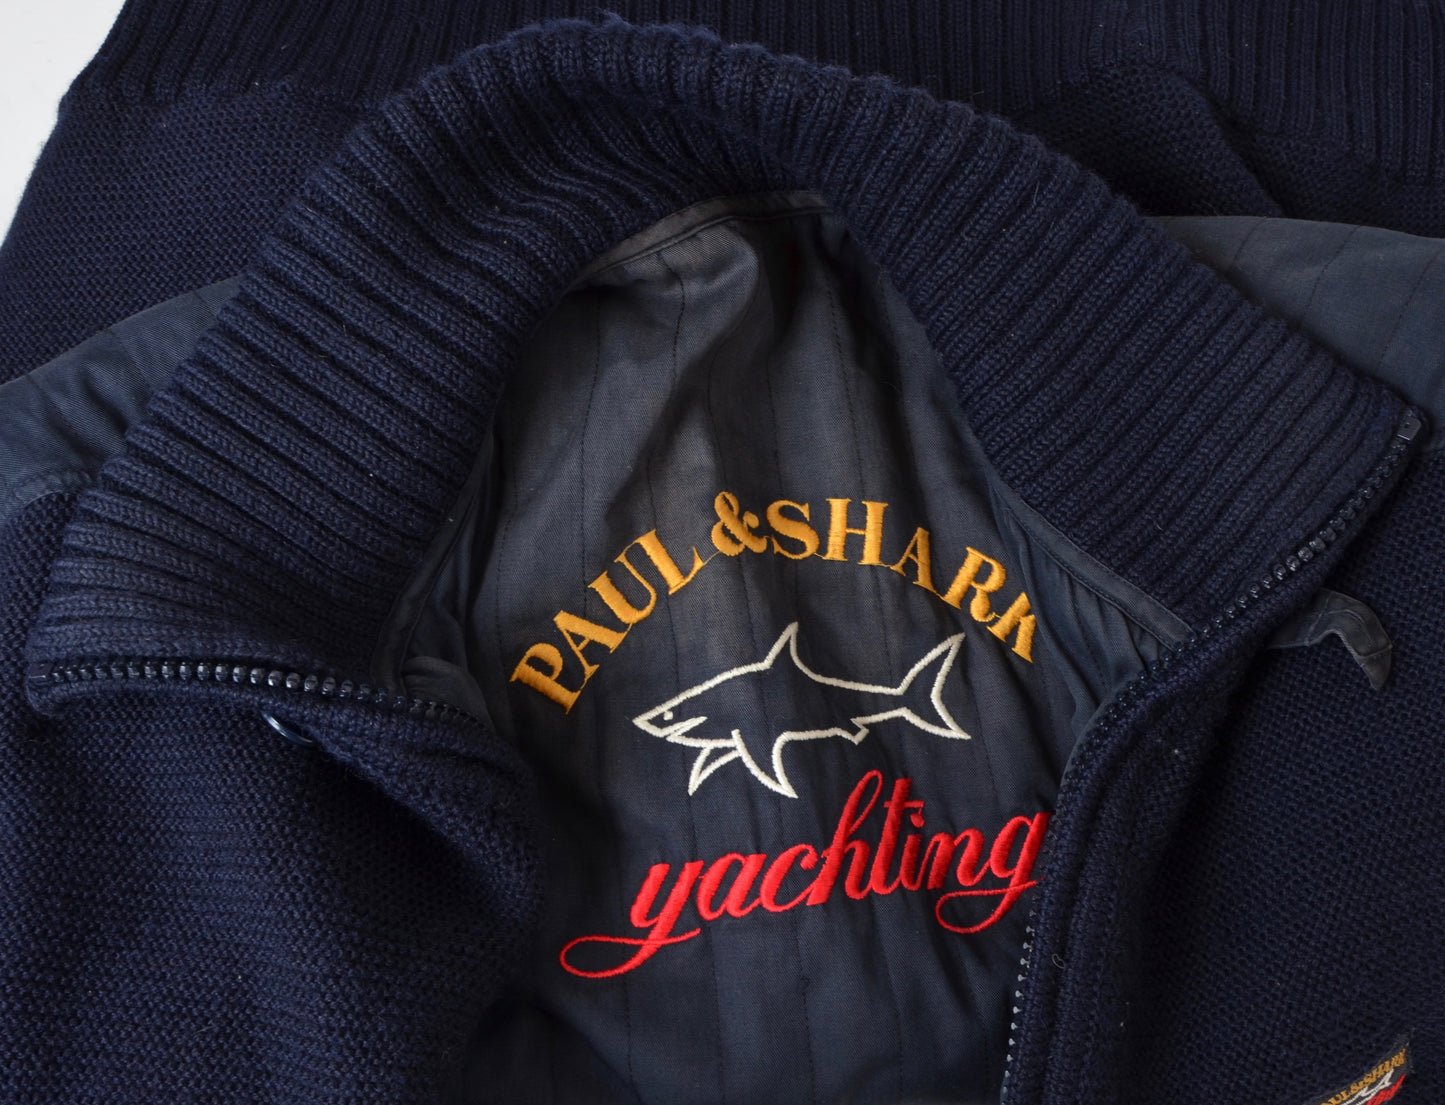 Paul & Shark Yachting Knit Wool Jacket Size M - Navy